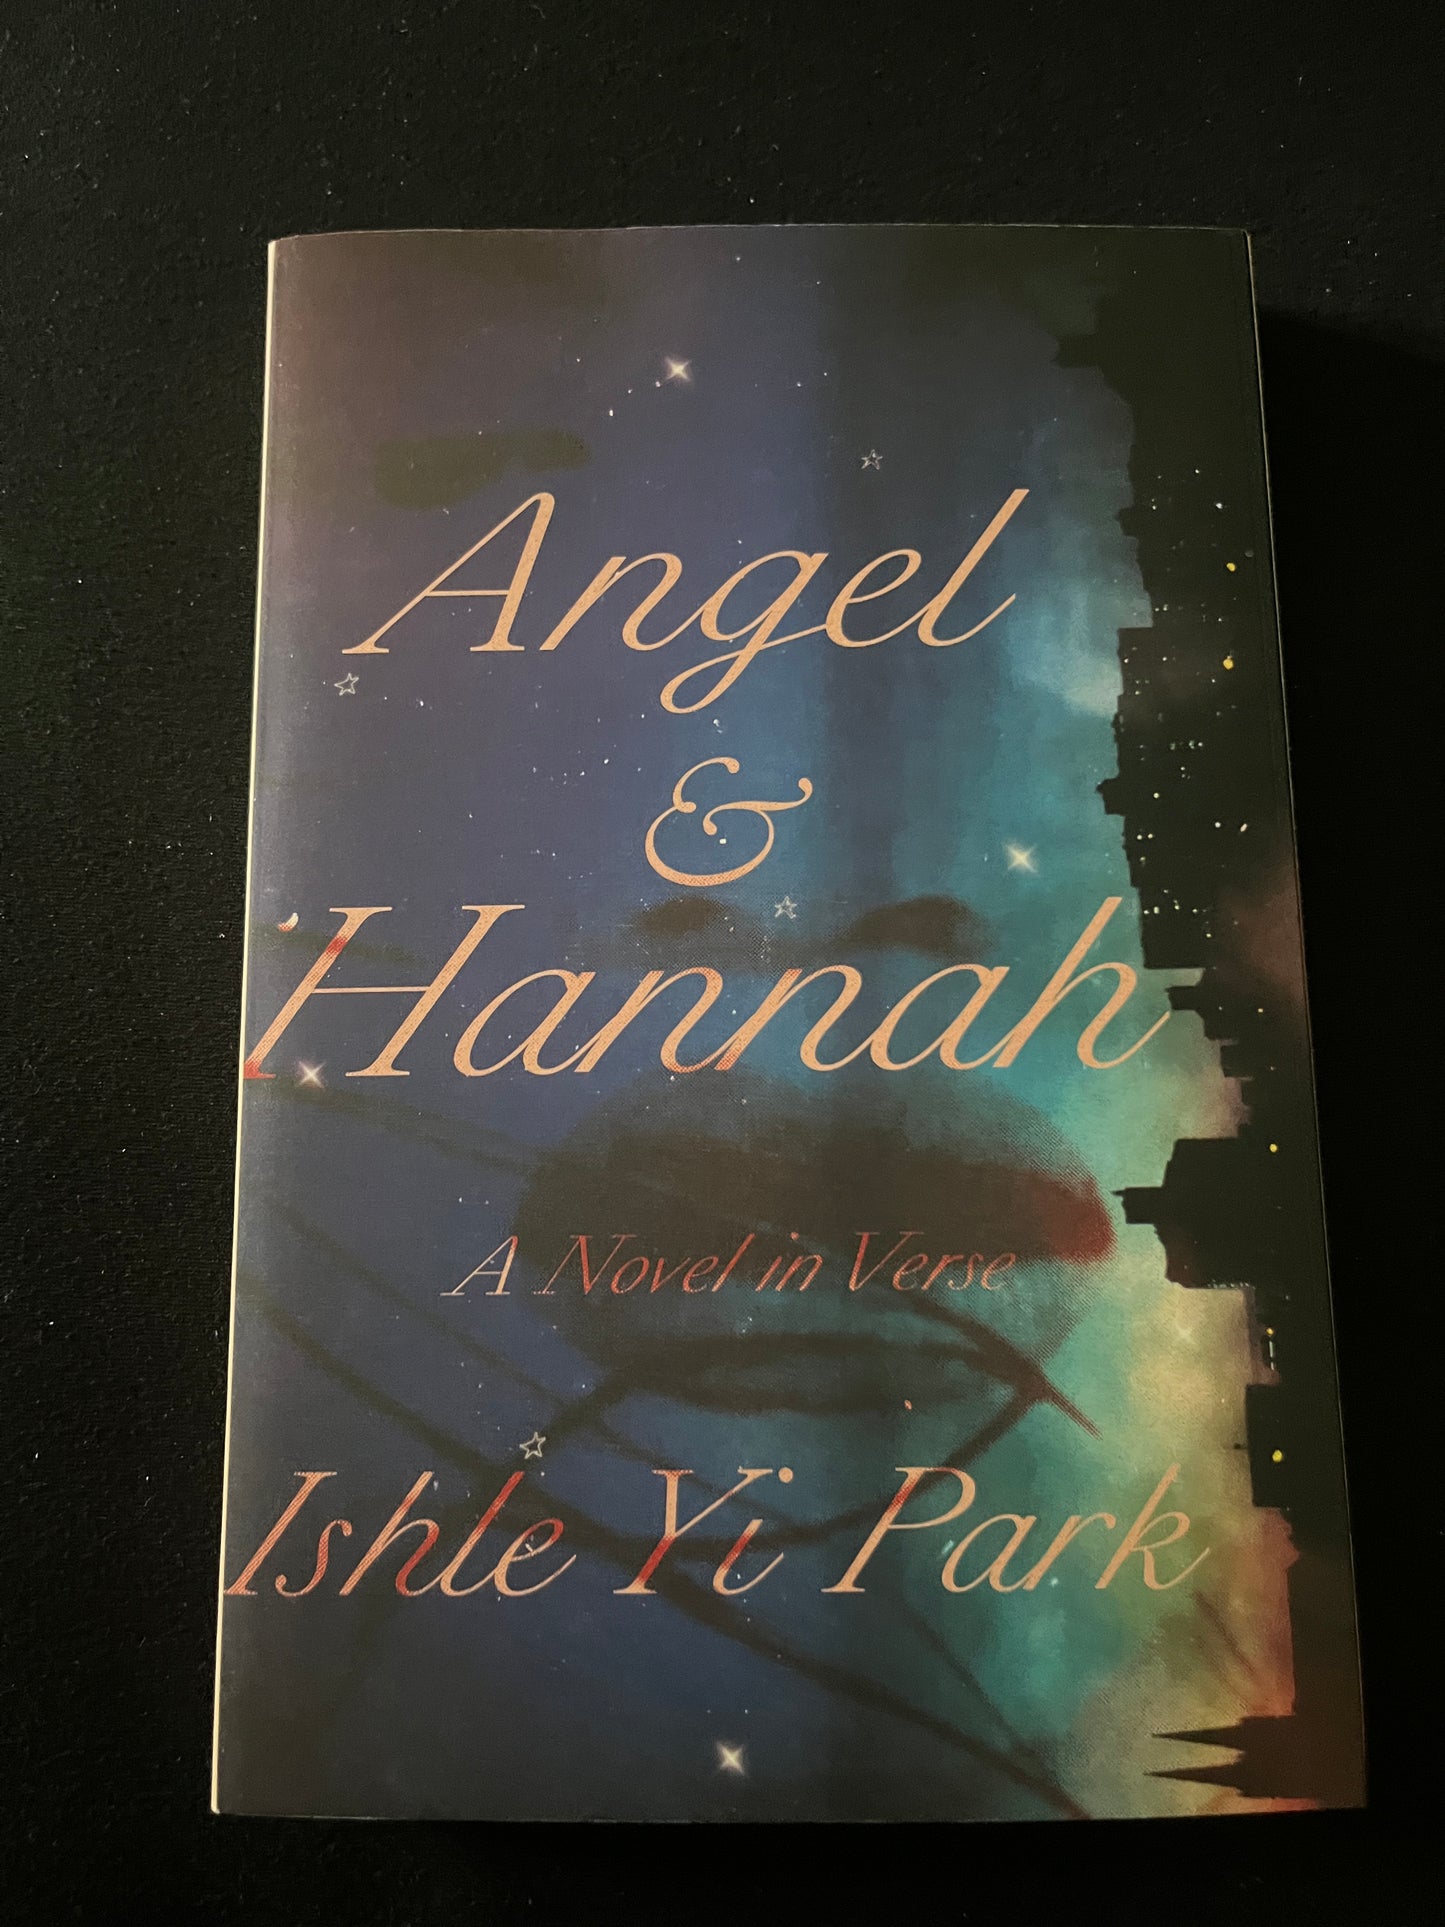 ANGEL & HANNAH by Ishle Yi Park